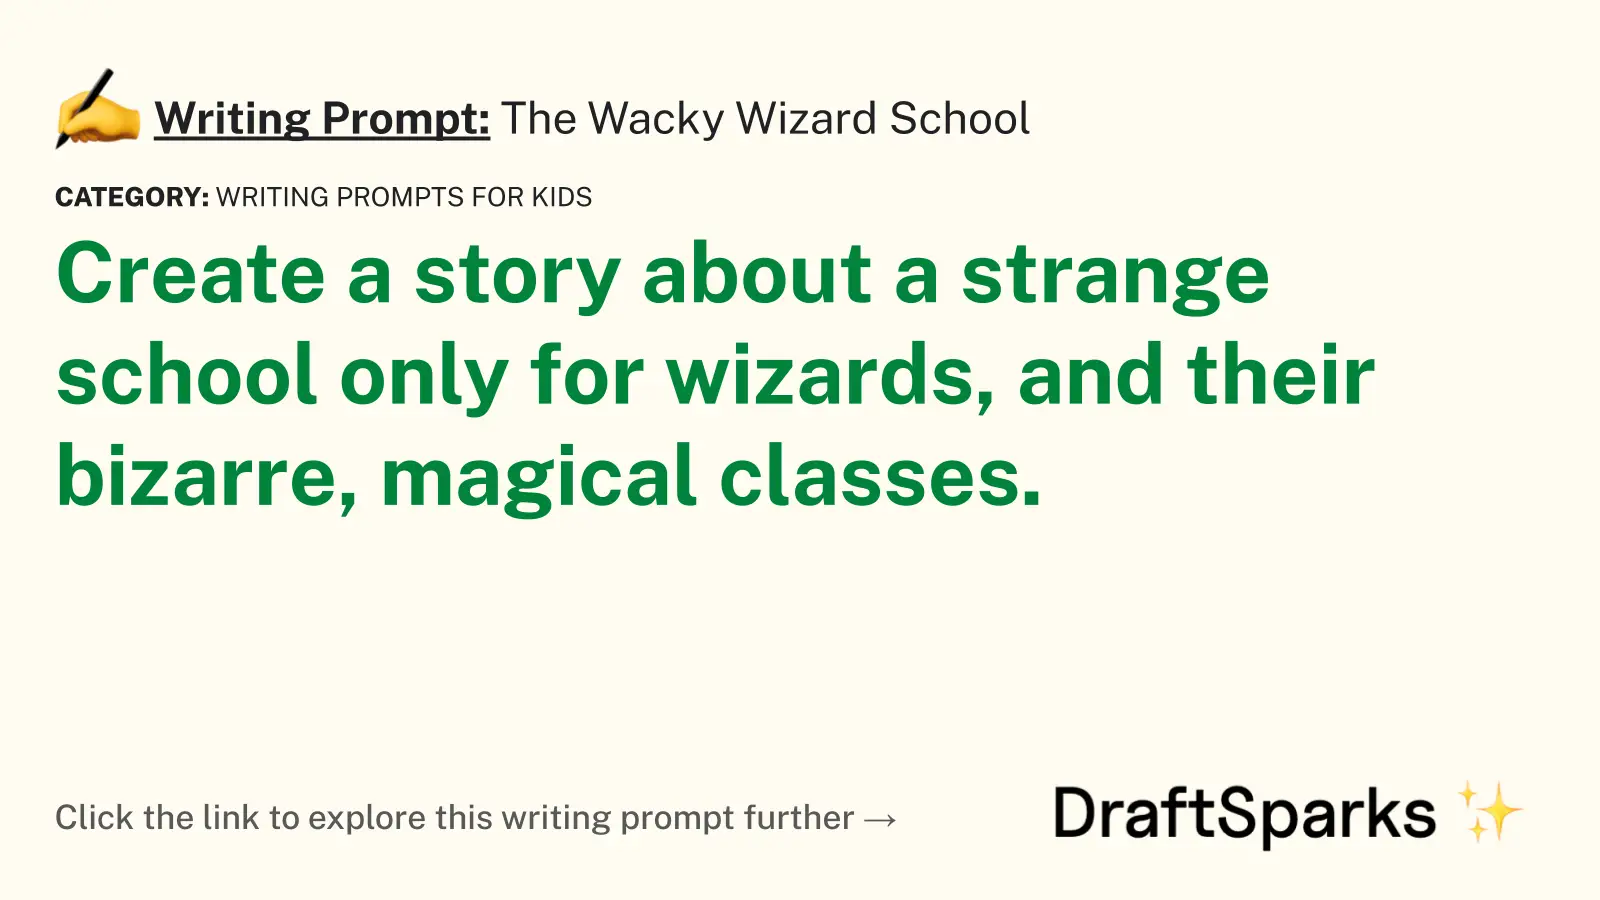 The Wacky Wizard School